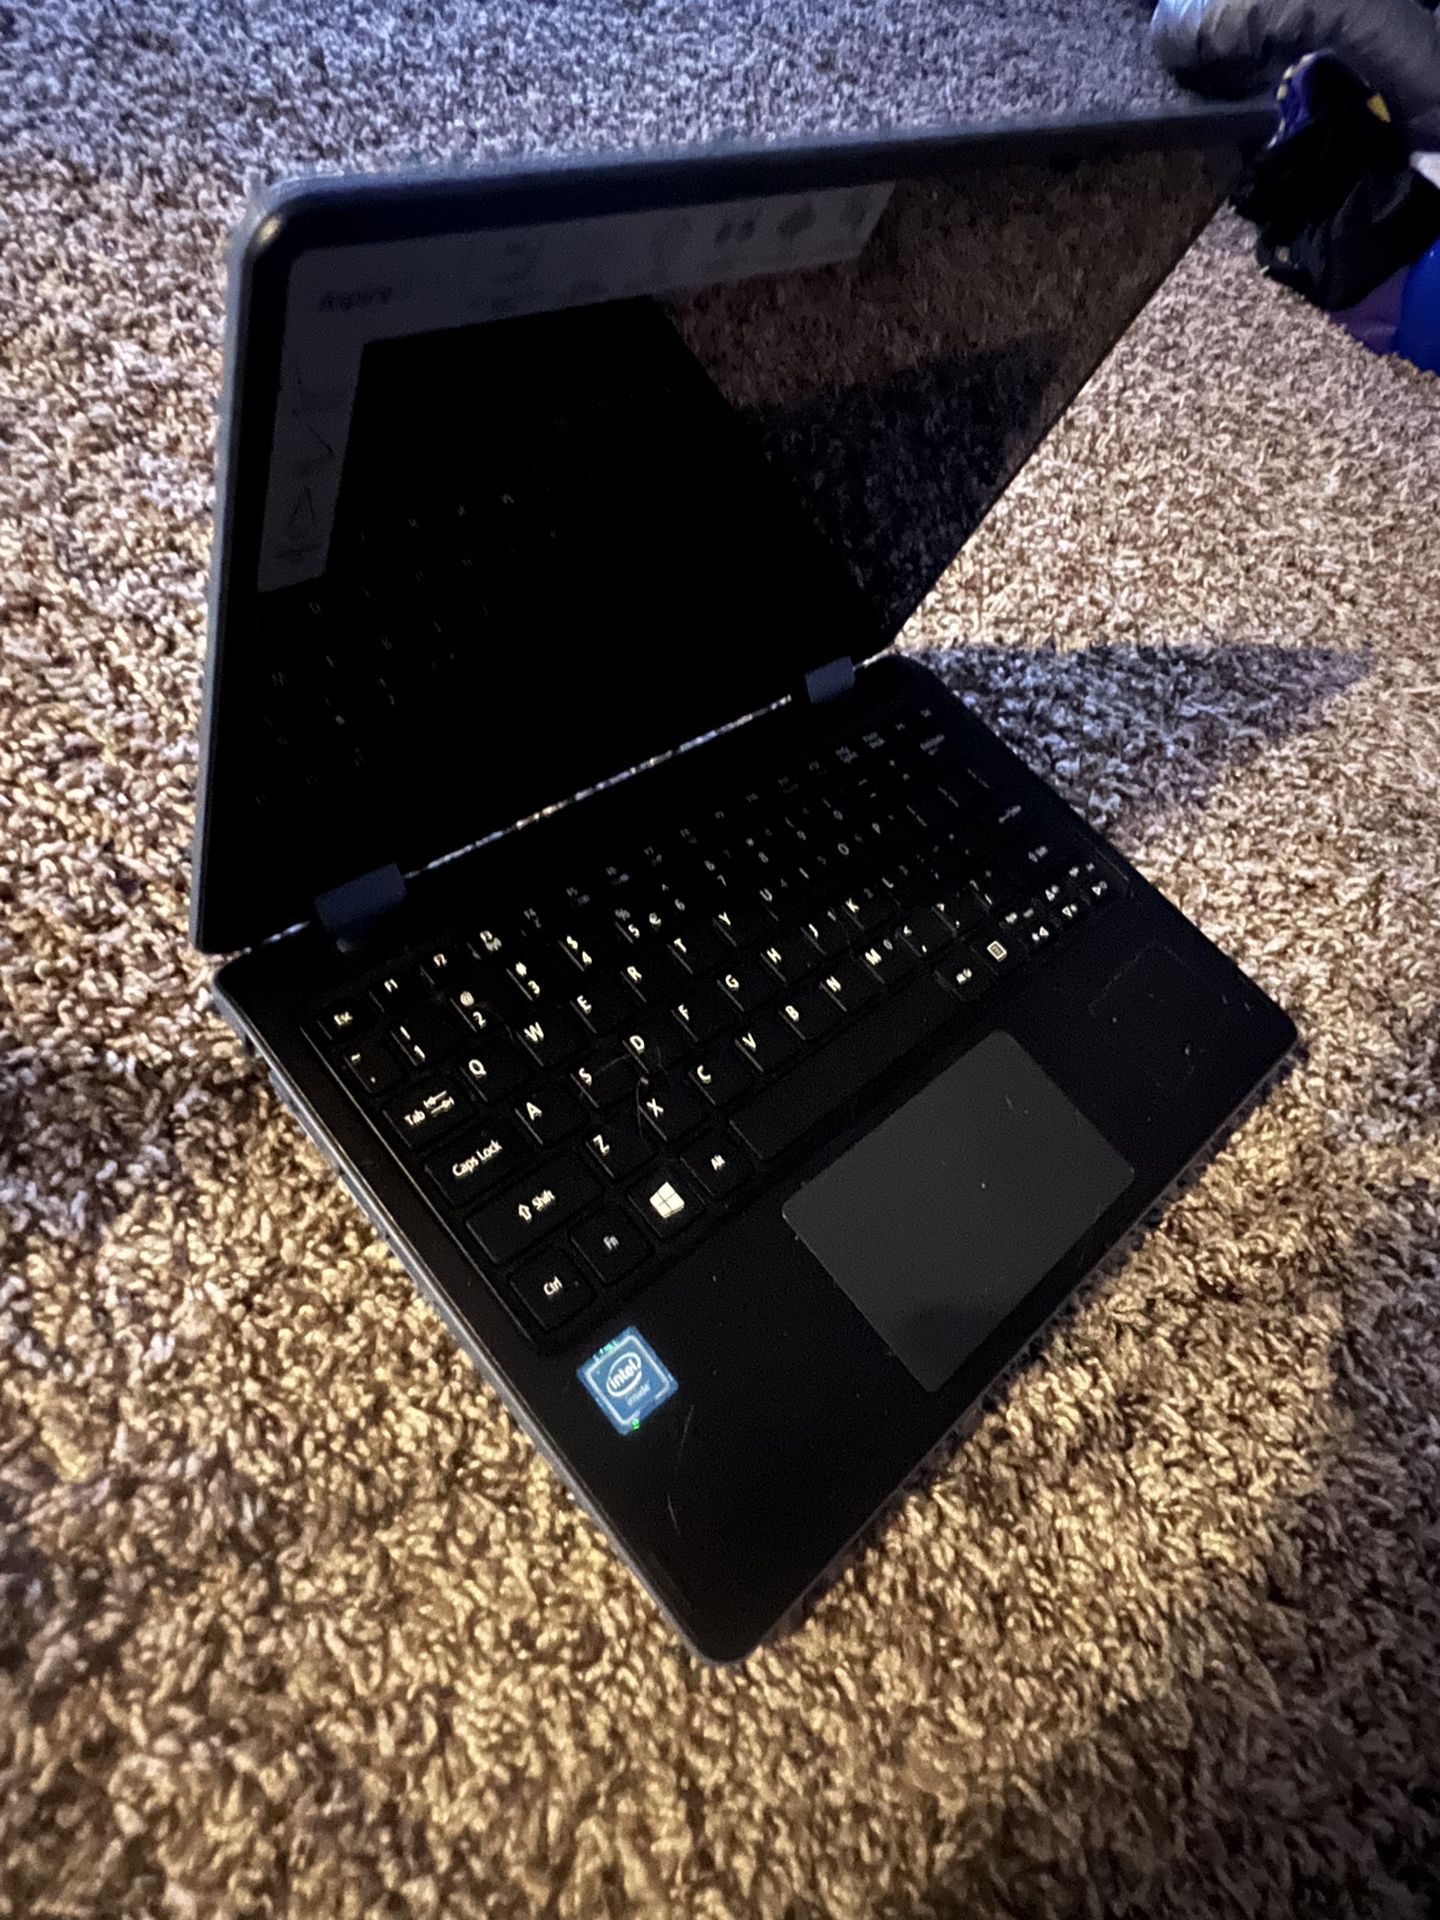 Acer Computer/tablet